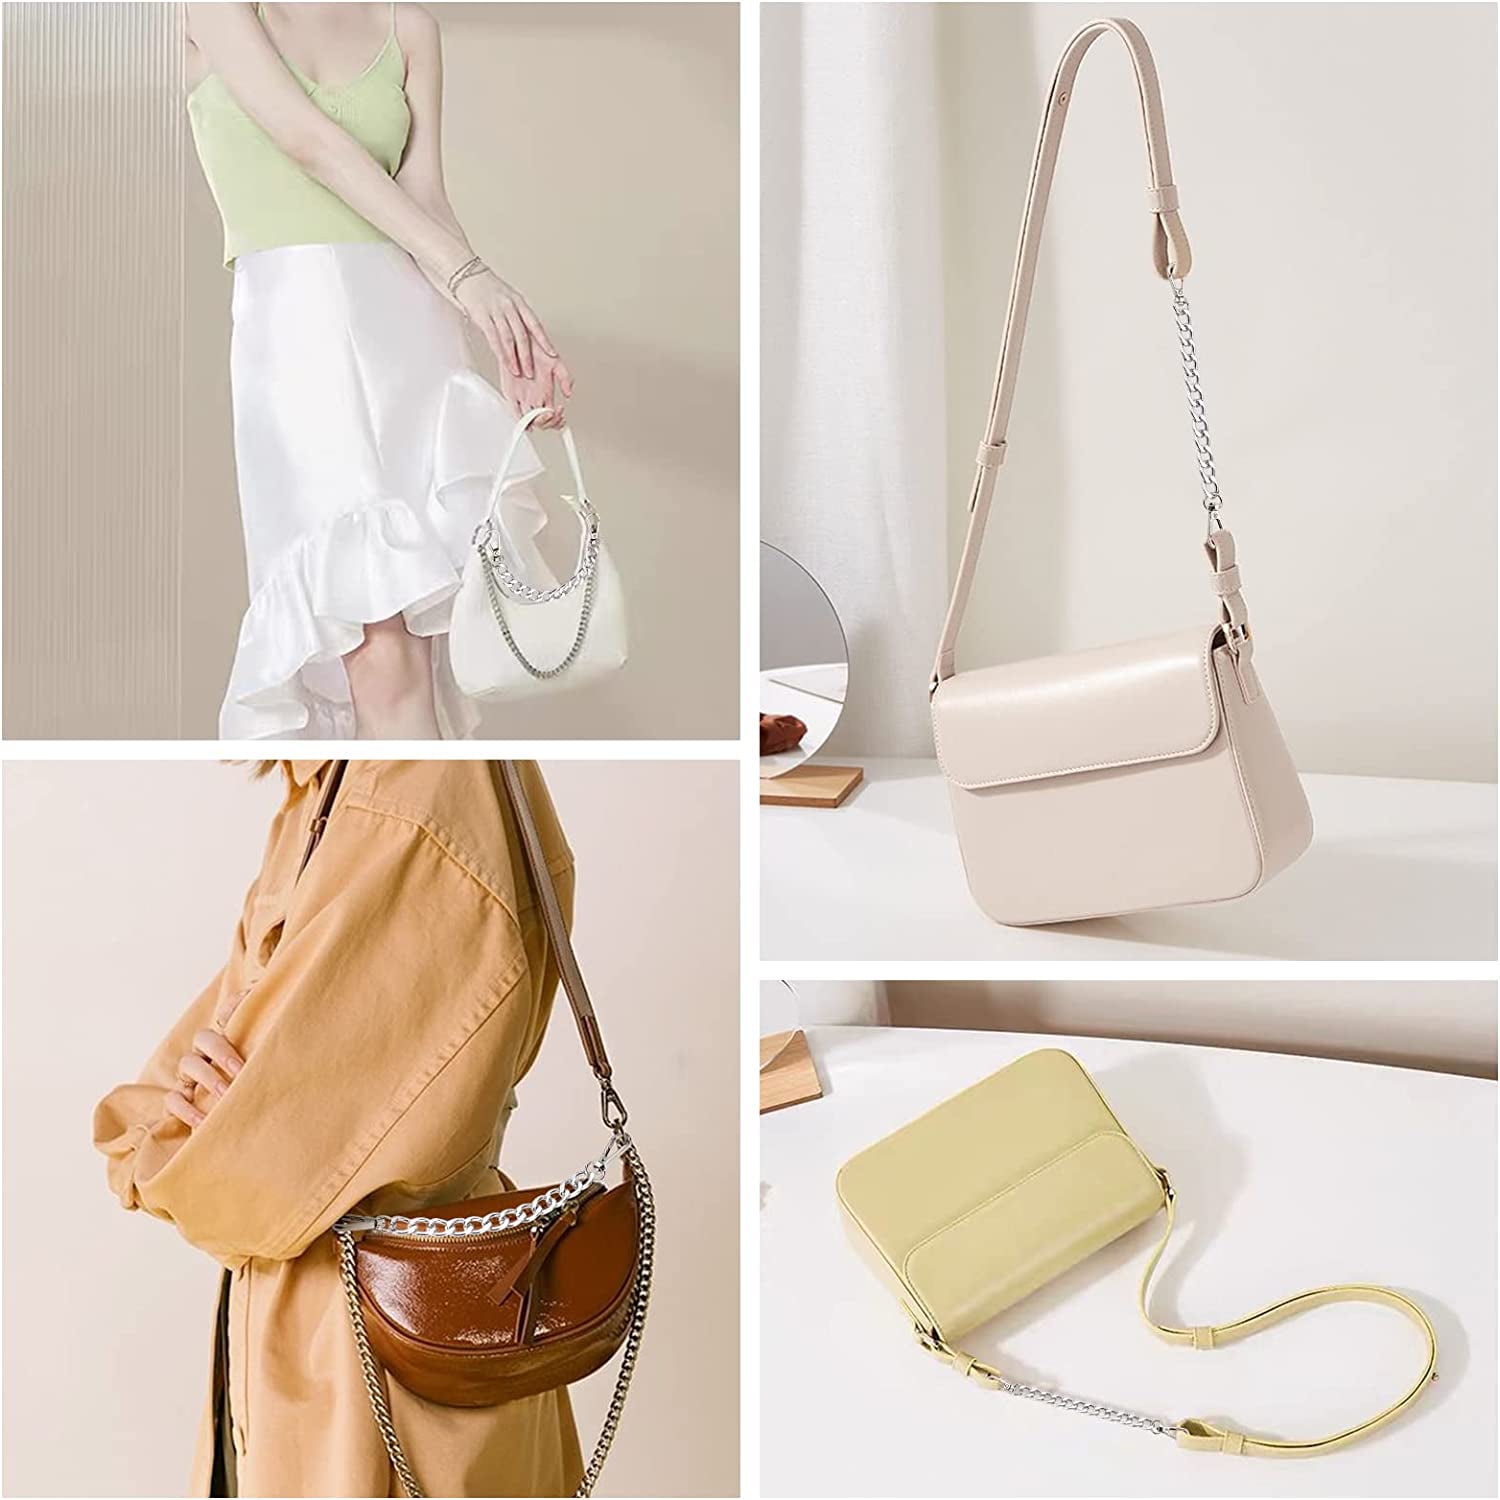 white bear and bell bag charm keychain handmade gift purse accessories |  eBay